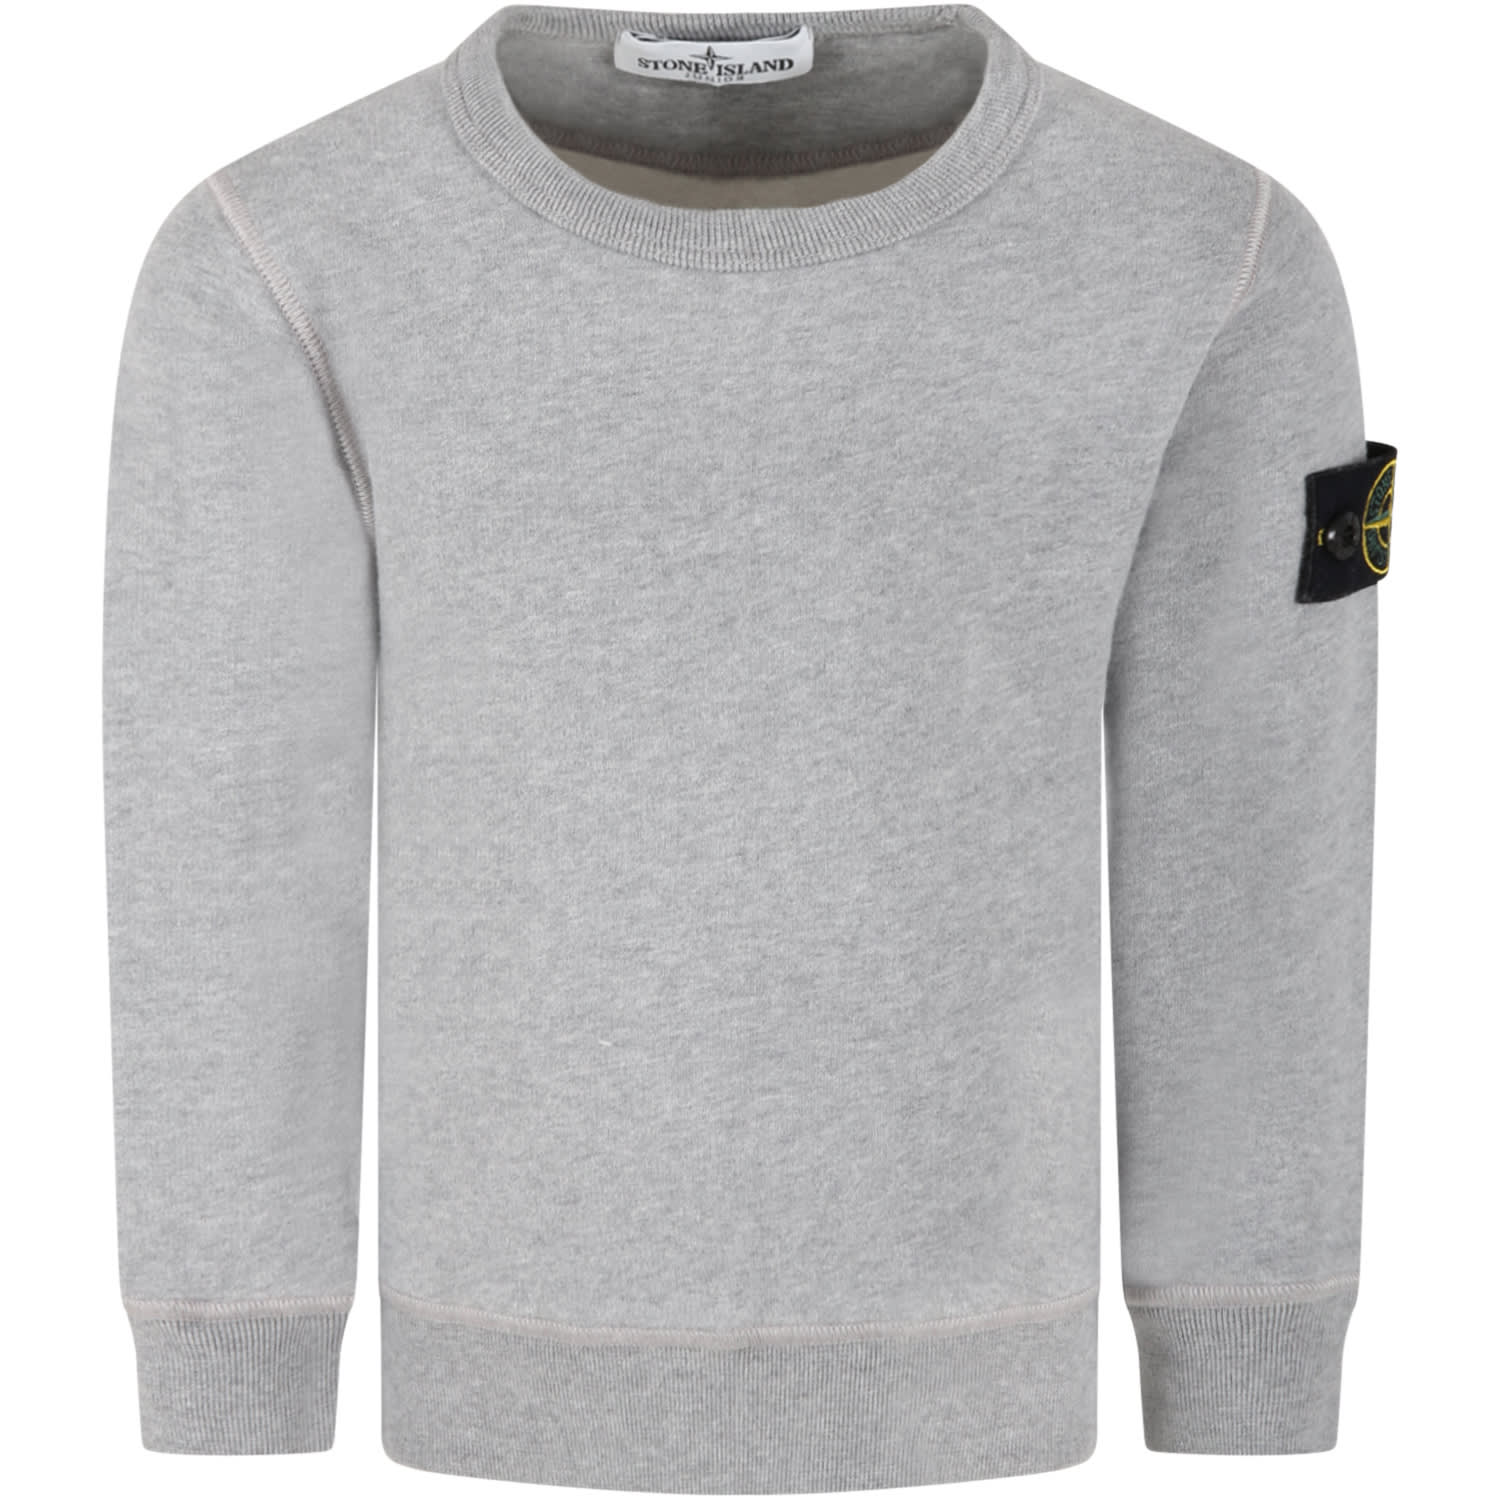 Stone Island Junior Grey Sweatshirt For Boy With Iconic Compass